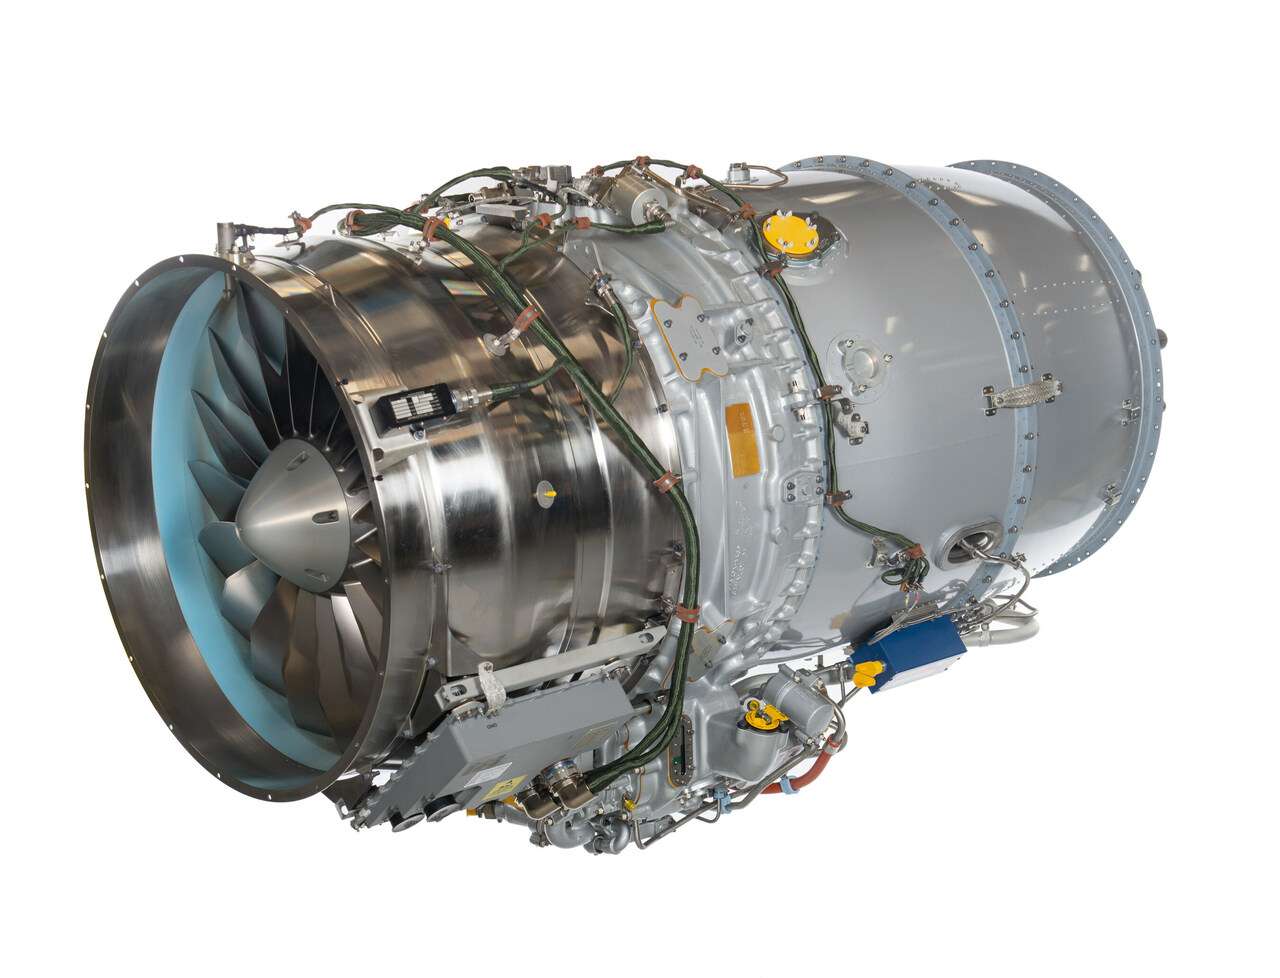 The new Pratt & Whitney PW545D engine.